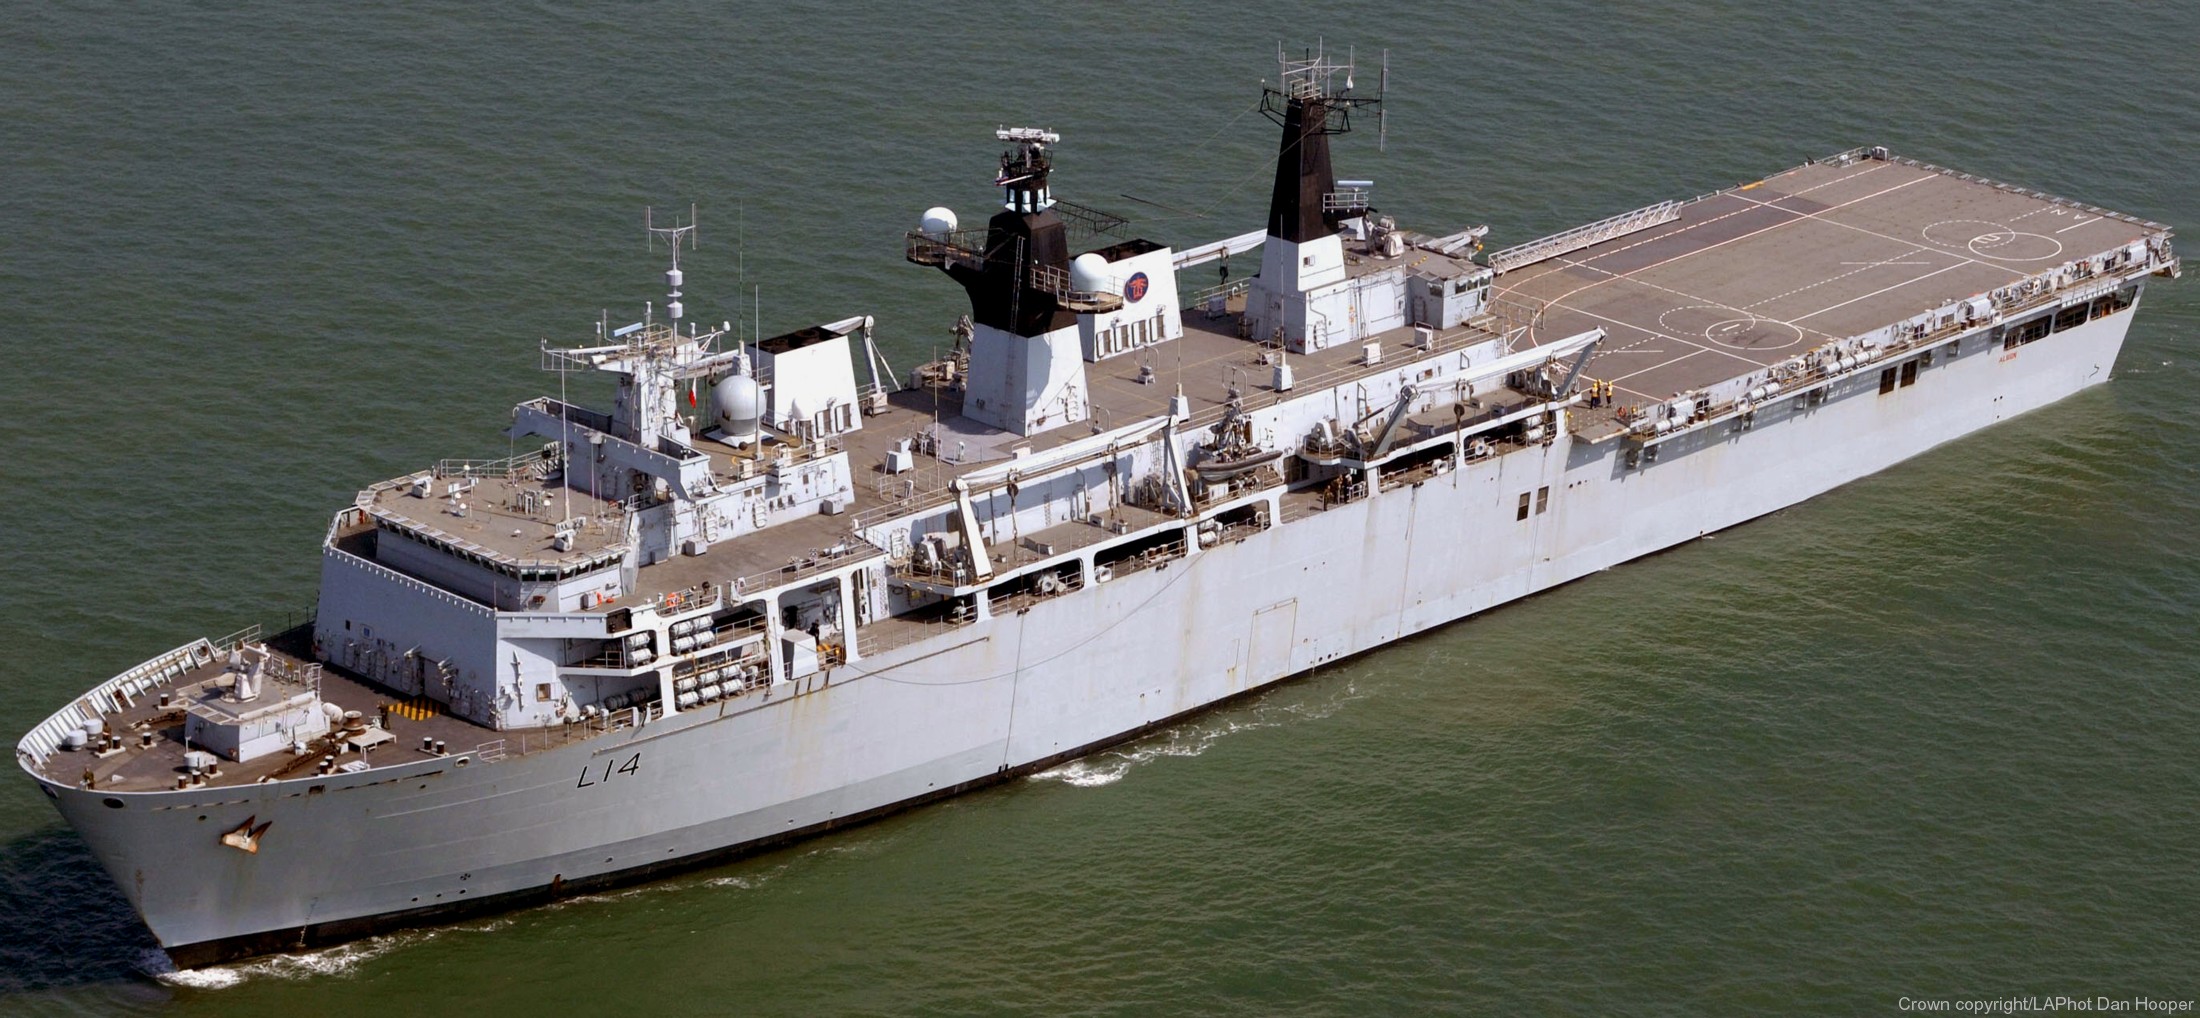 albion class landing platform dock amphibious assault ship lpd royal navy 09c